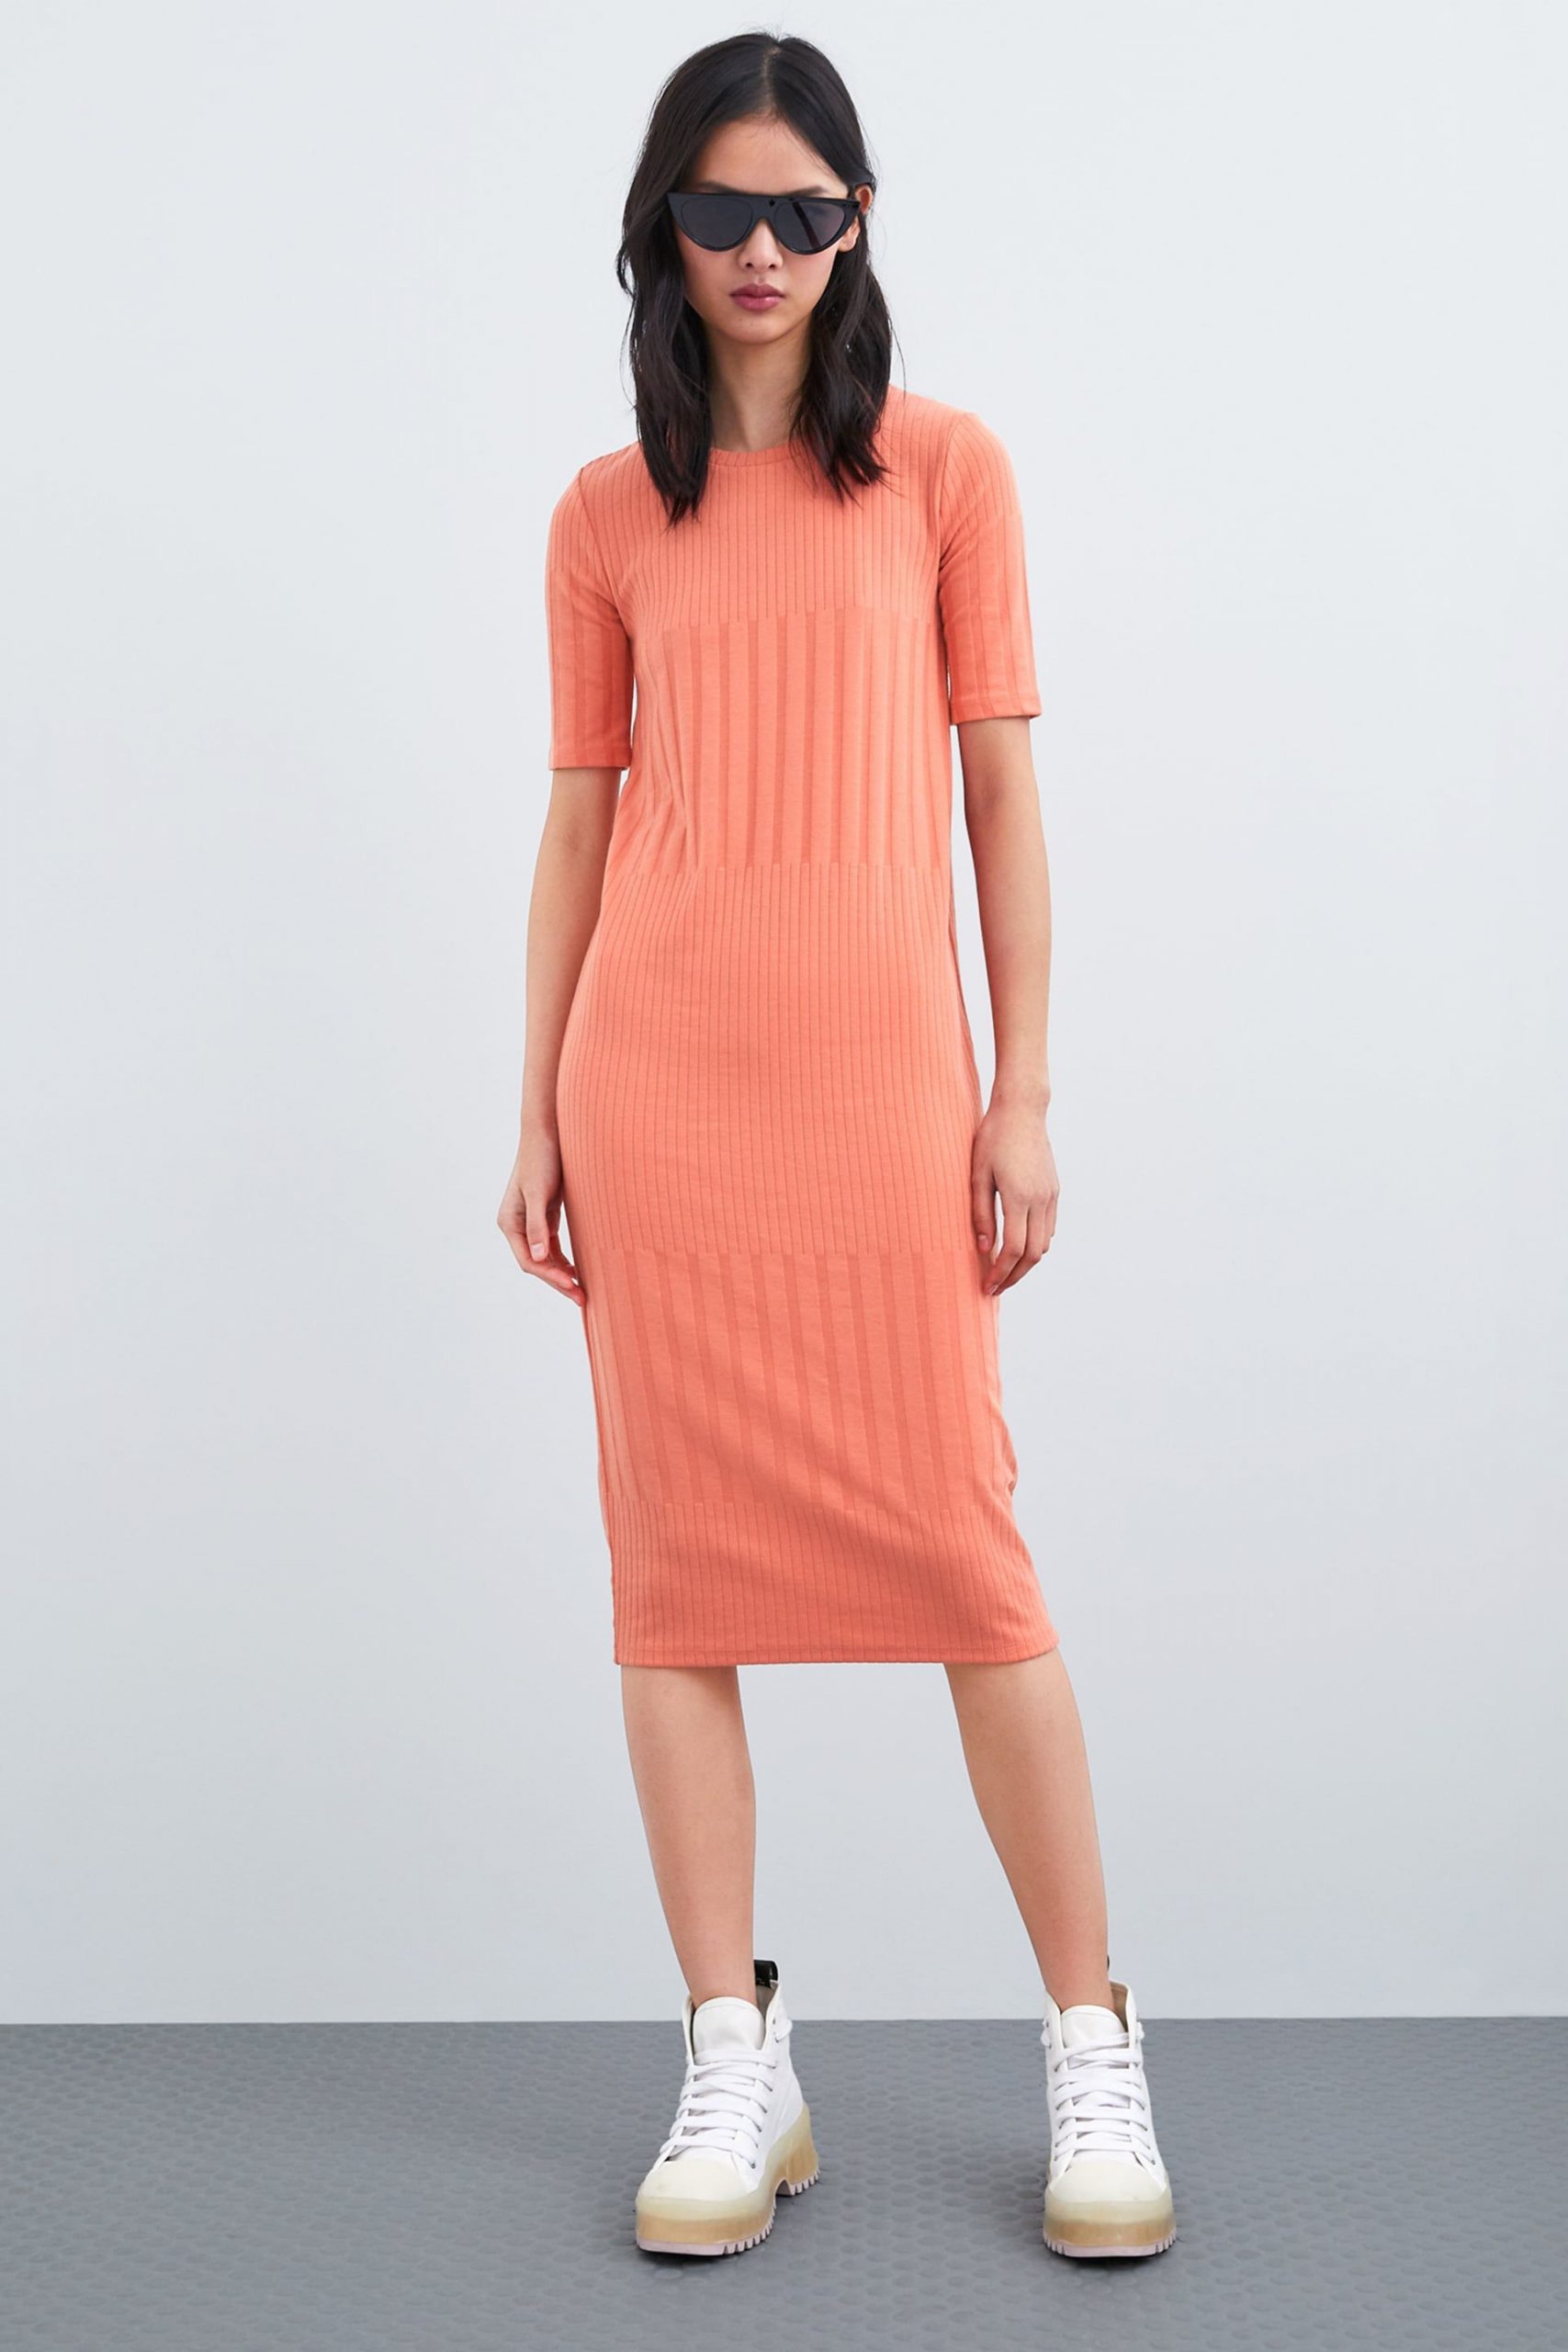 Zara  Woman  Textured Dress  Kleider Zara Mode